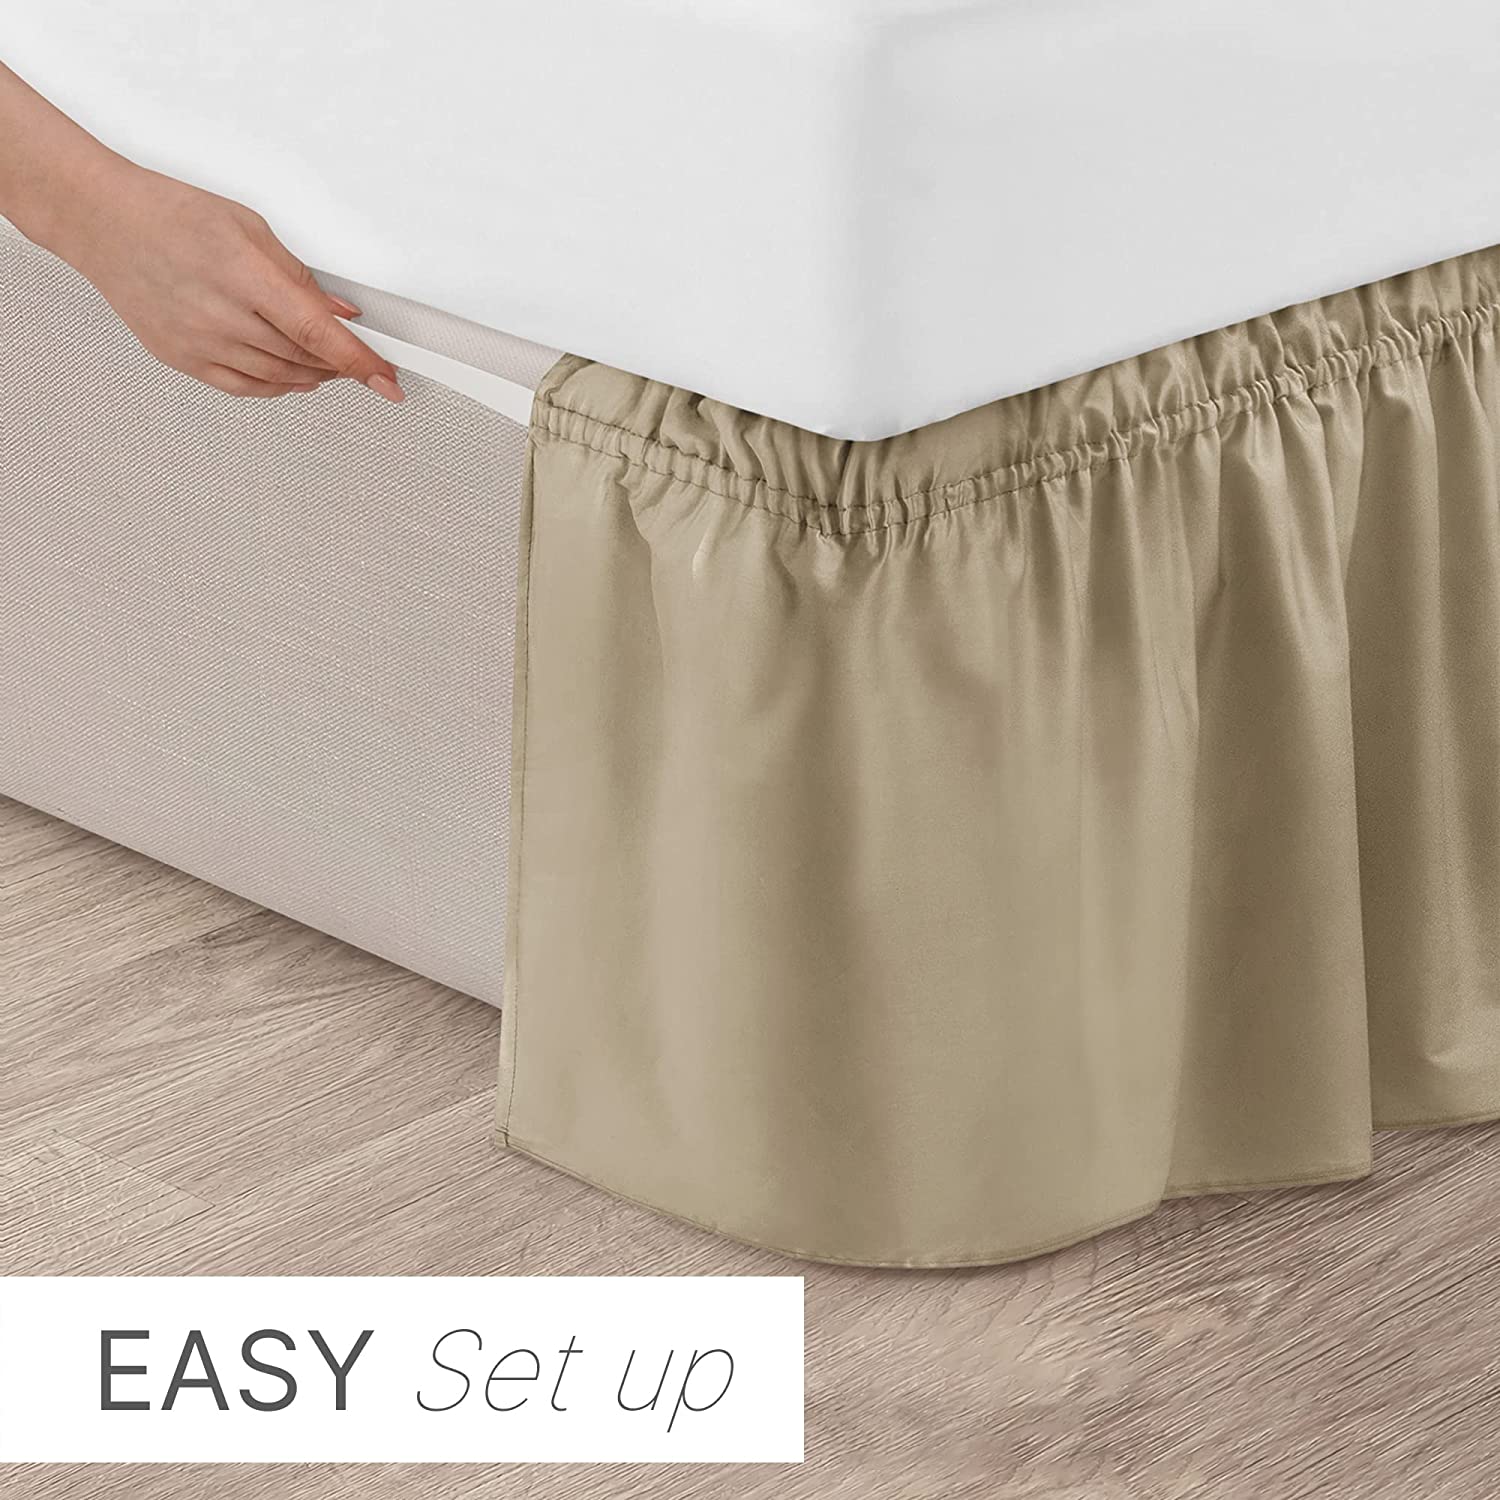 tes Ruffled Elastic Wrap Around Bedskirt 15 Inch Drop - Beige